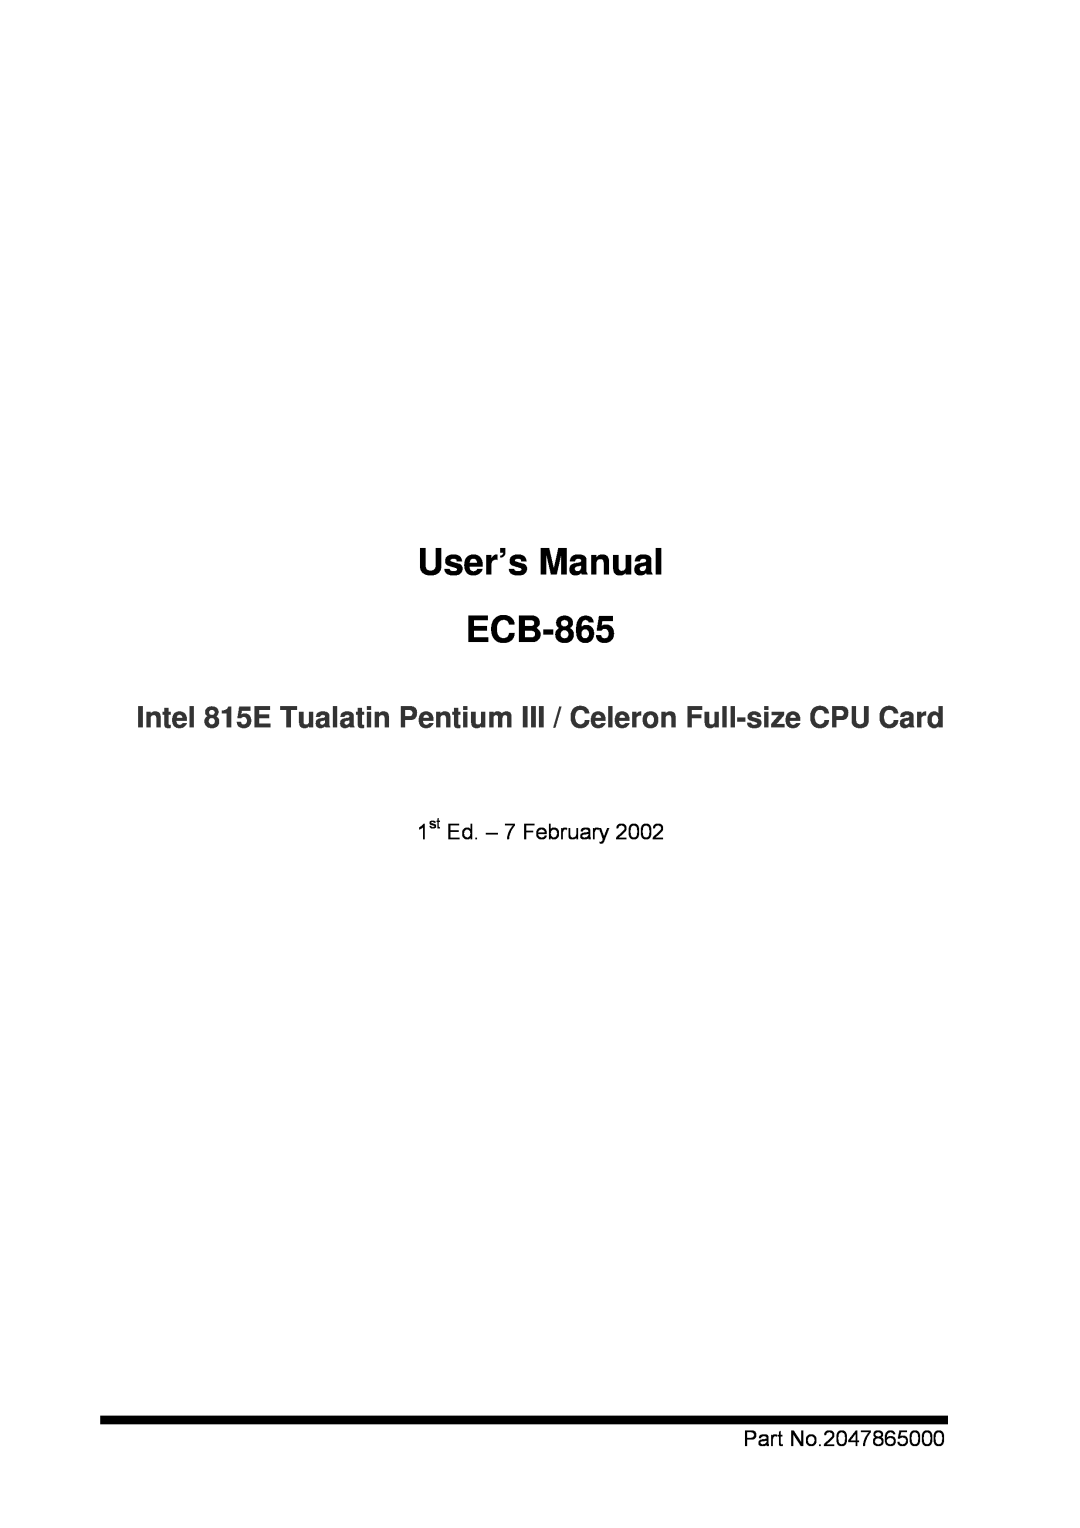 Intel user manual User’s Manual ECB-865, 1st Ed. – 7 February Part No.2047865000 